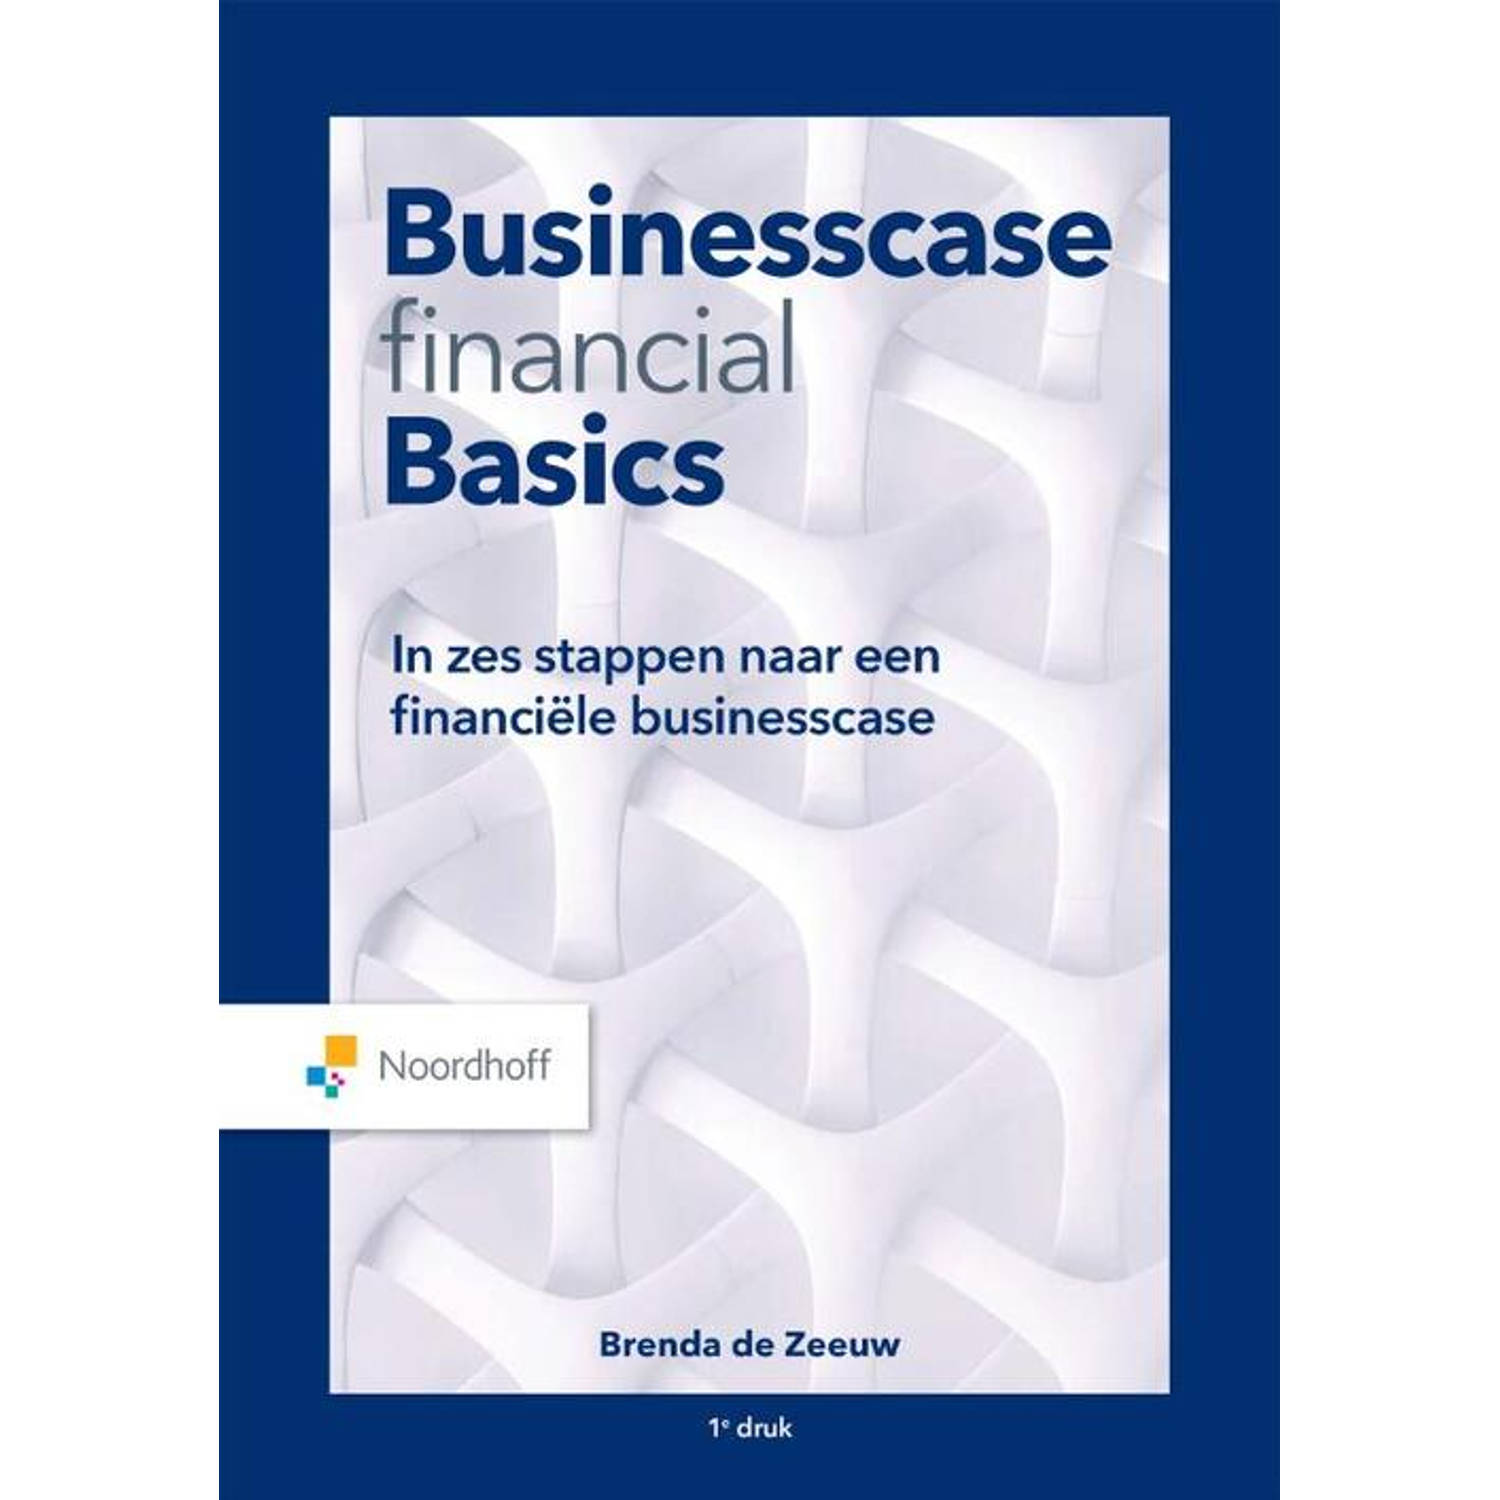 Businesscase Financial Basics